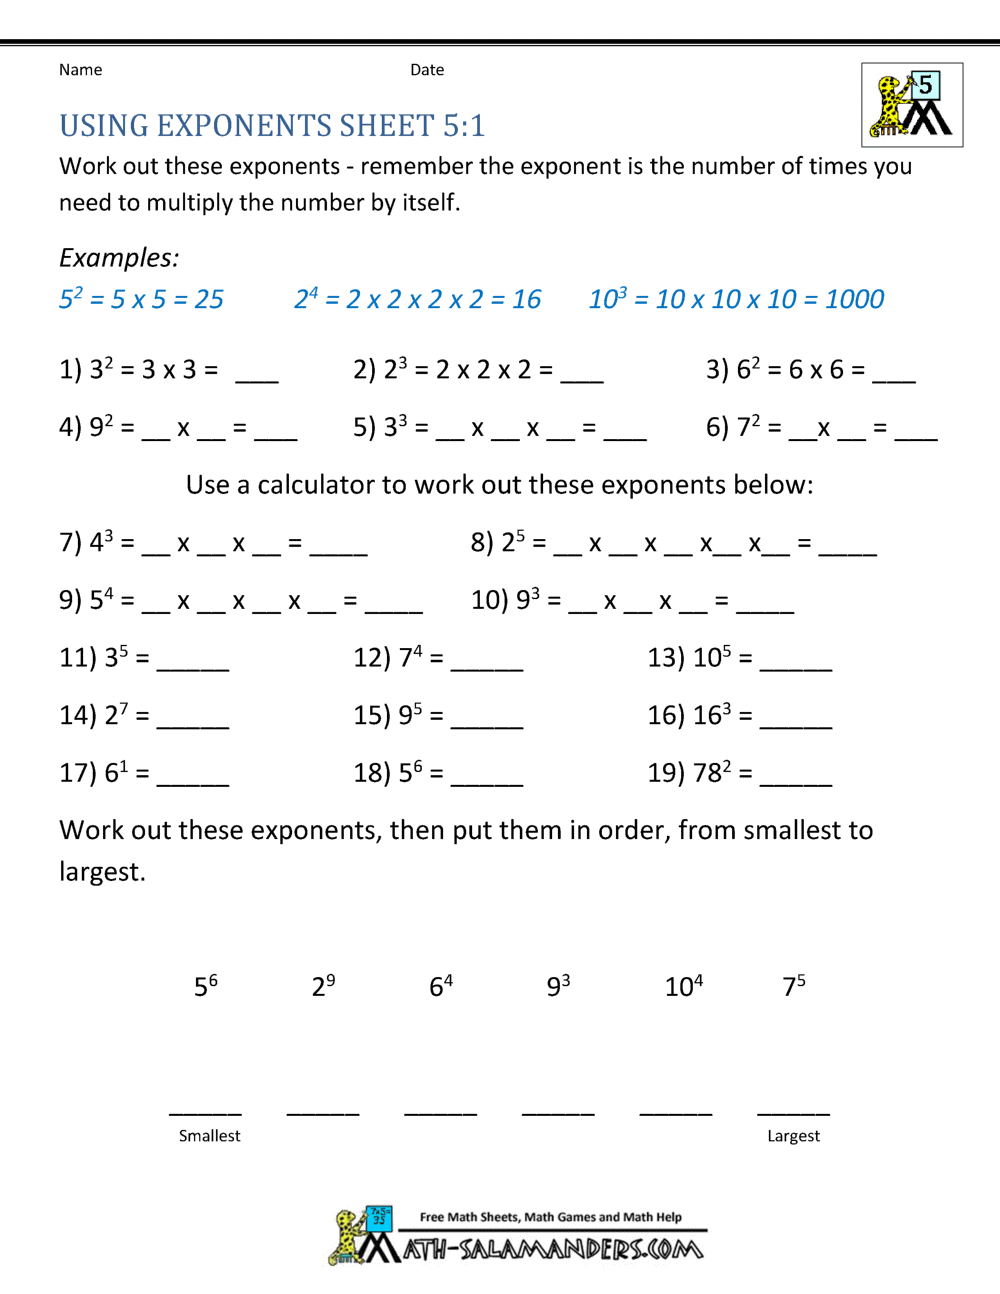 discrete mathematics beginners guide pdf